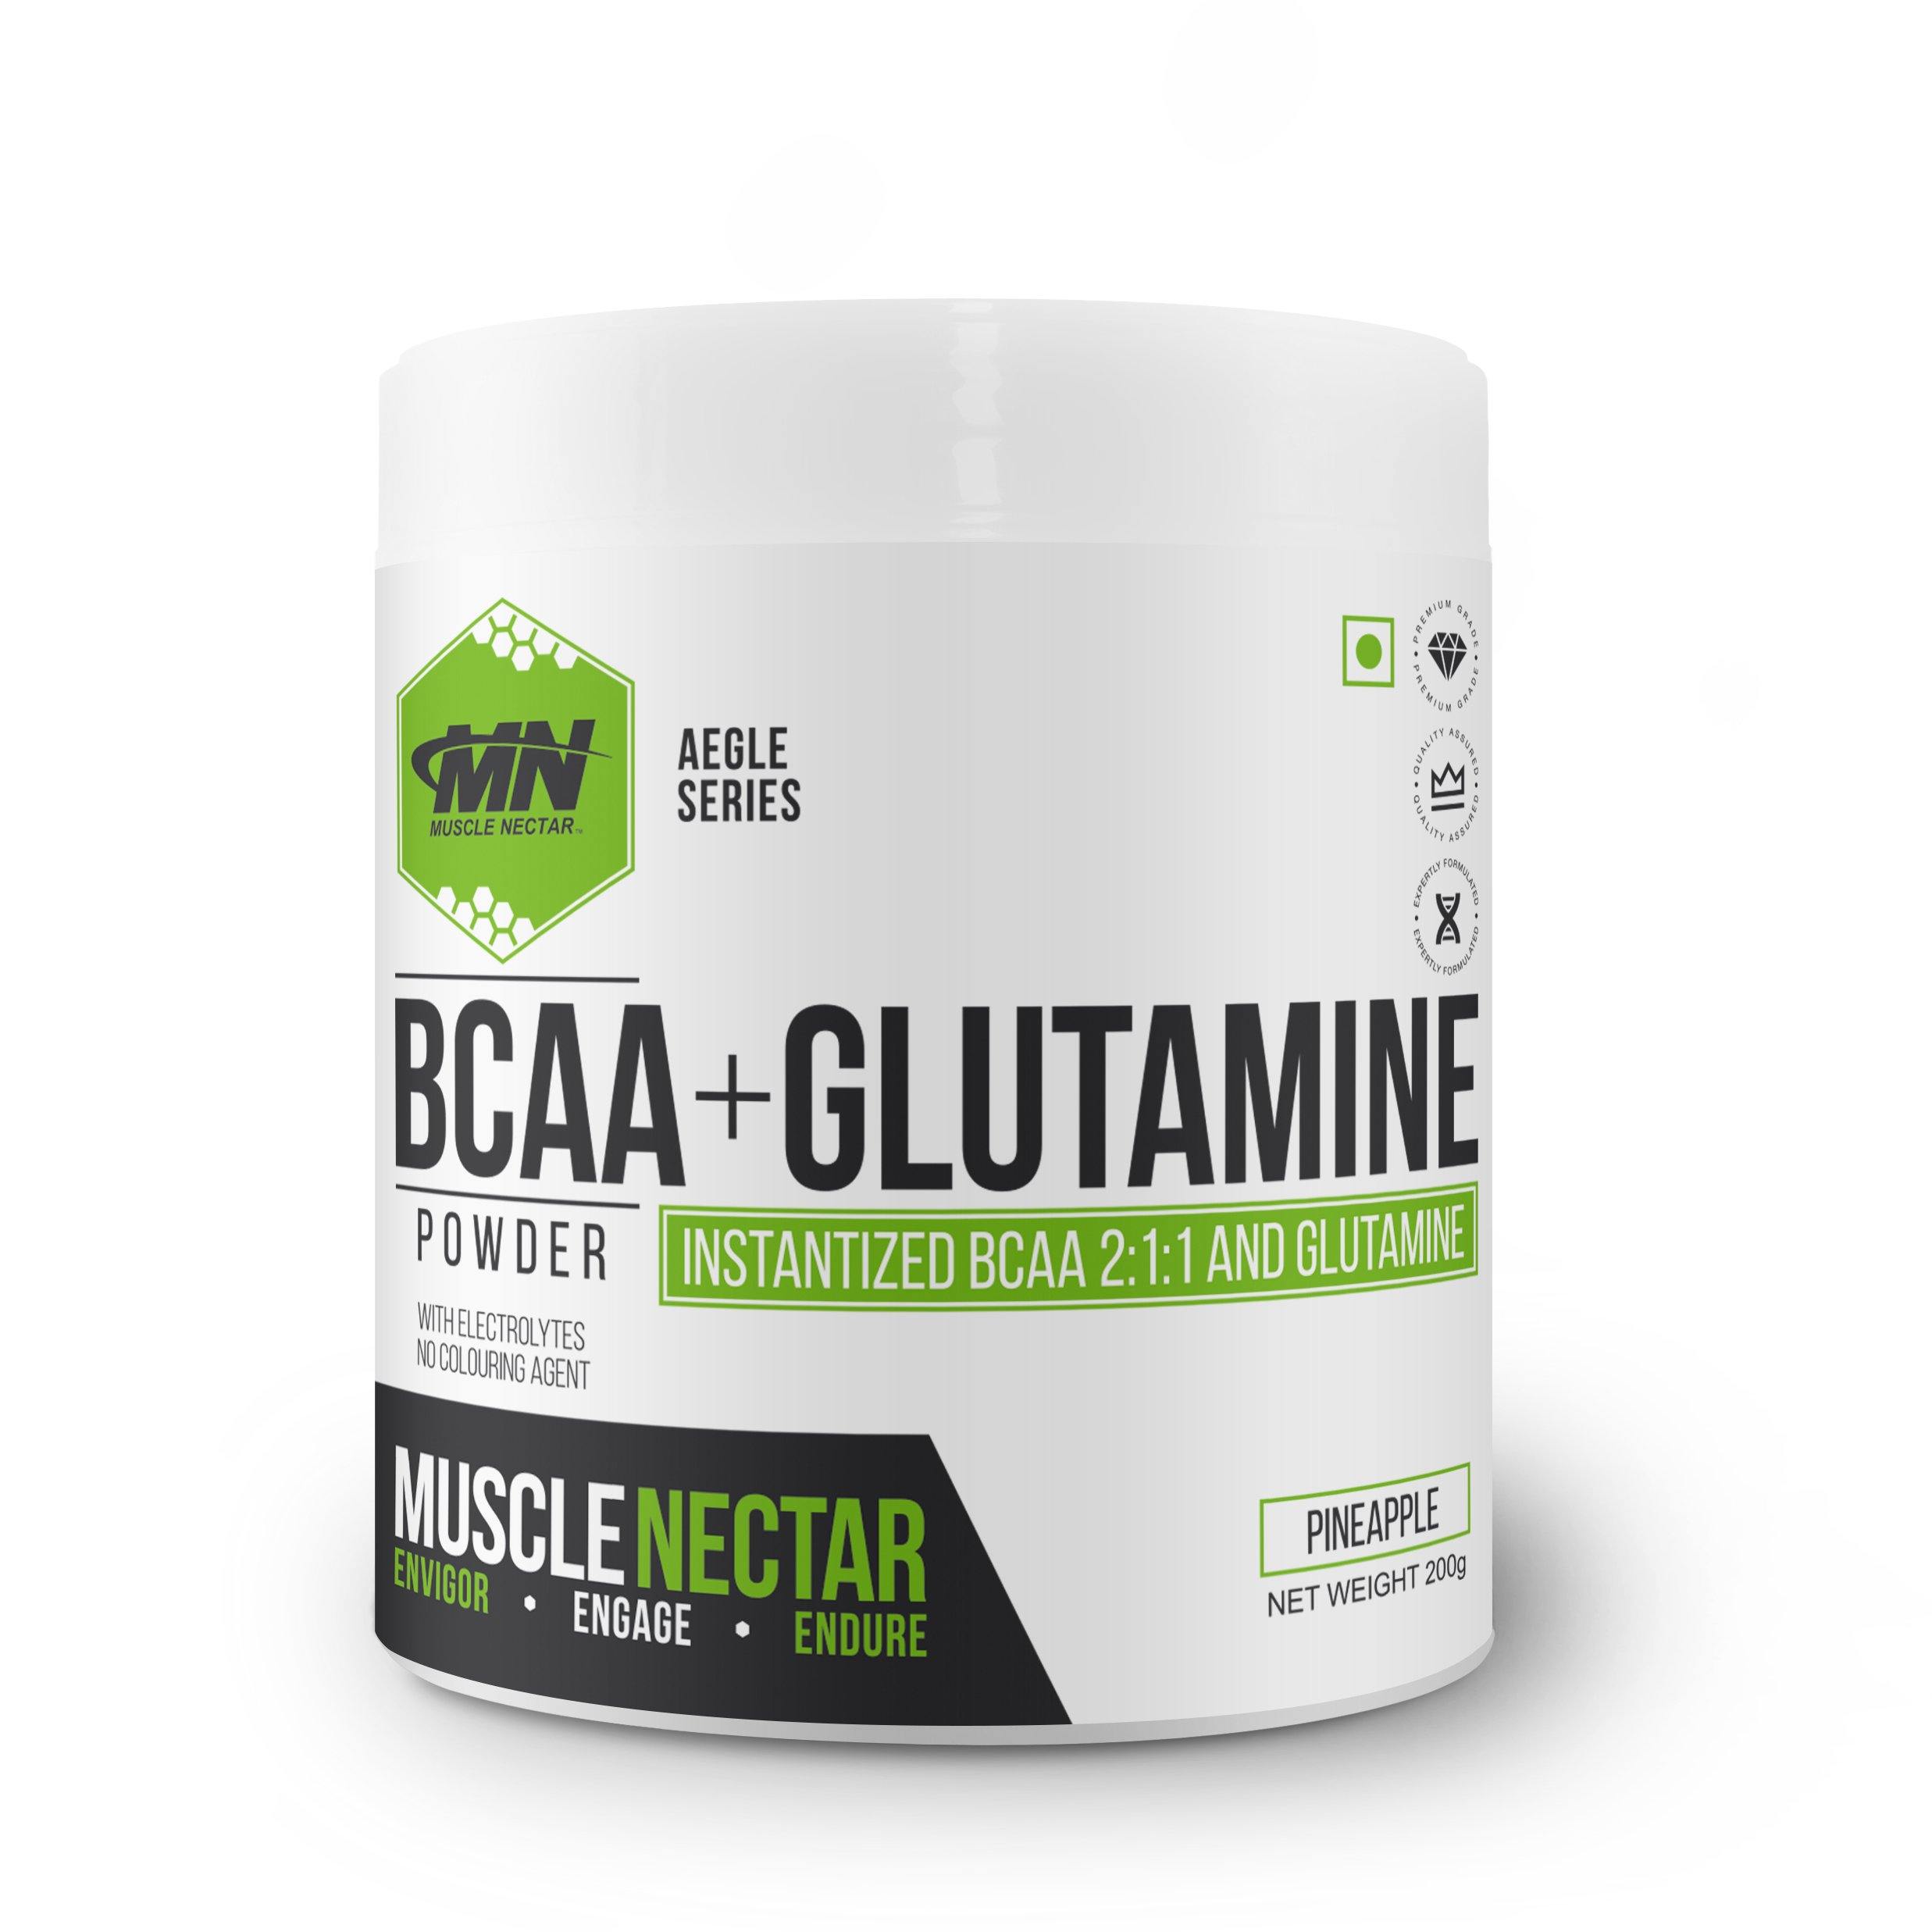 BCAA + Glutamine - Muscle Nectar